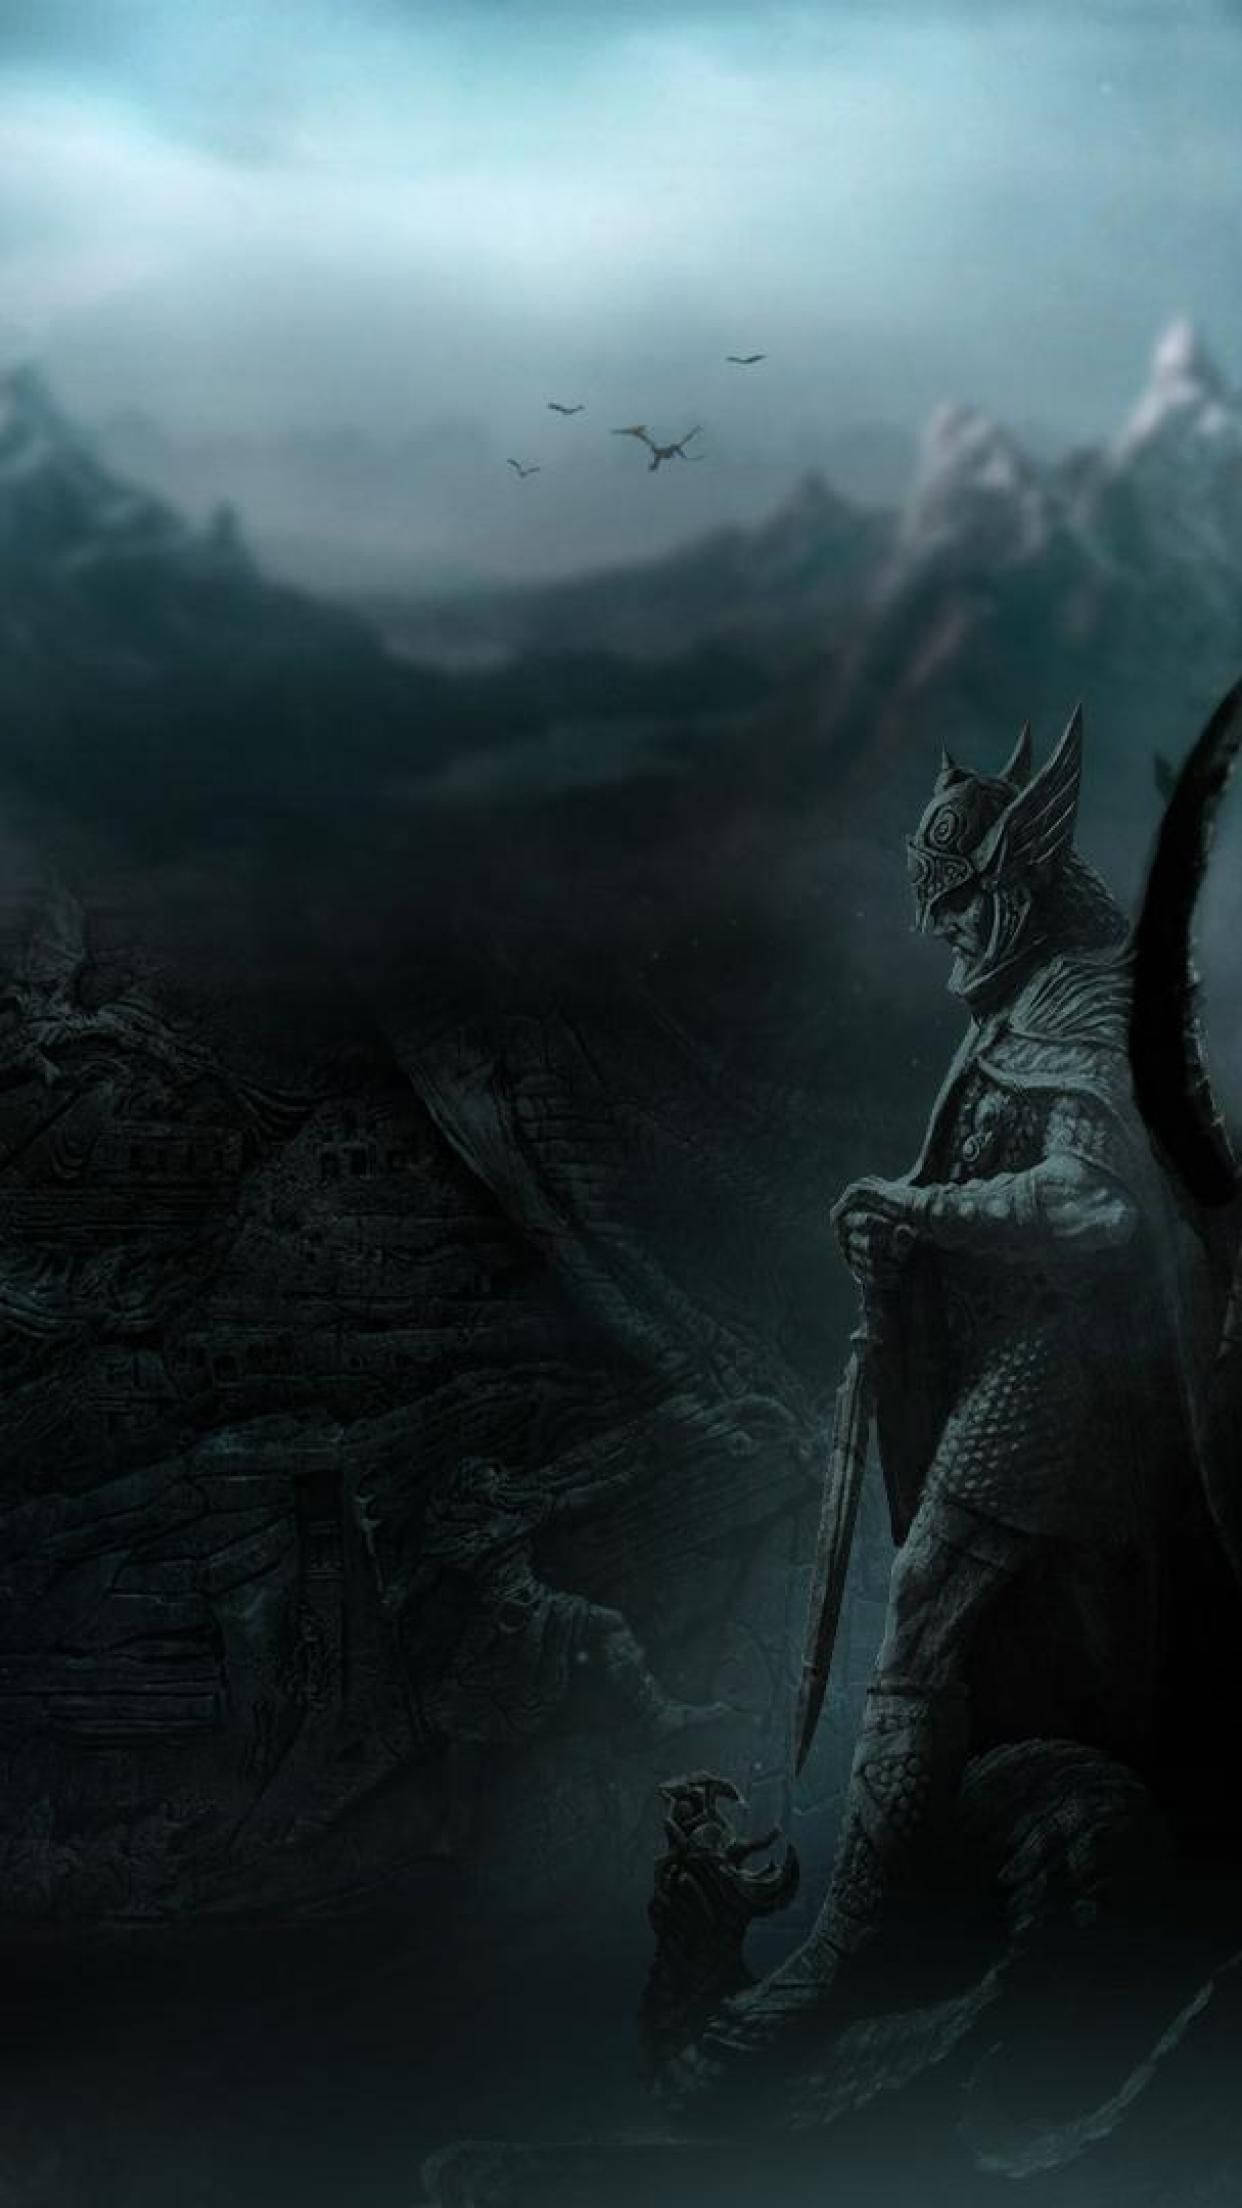 Download Skyrim 4k Dragonborn Statue Holding A Sword Wallpaper | Wallpapers .com